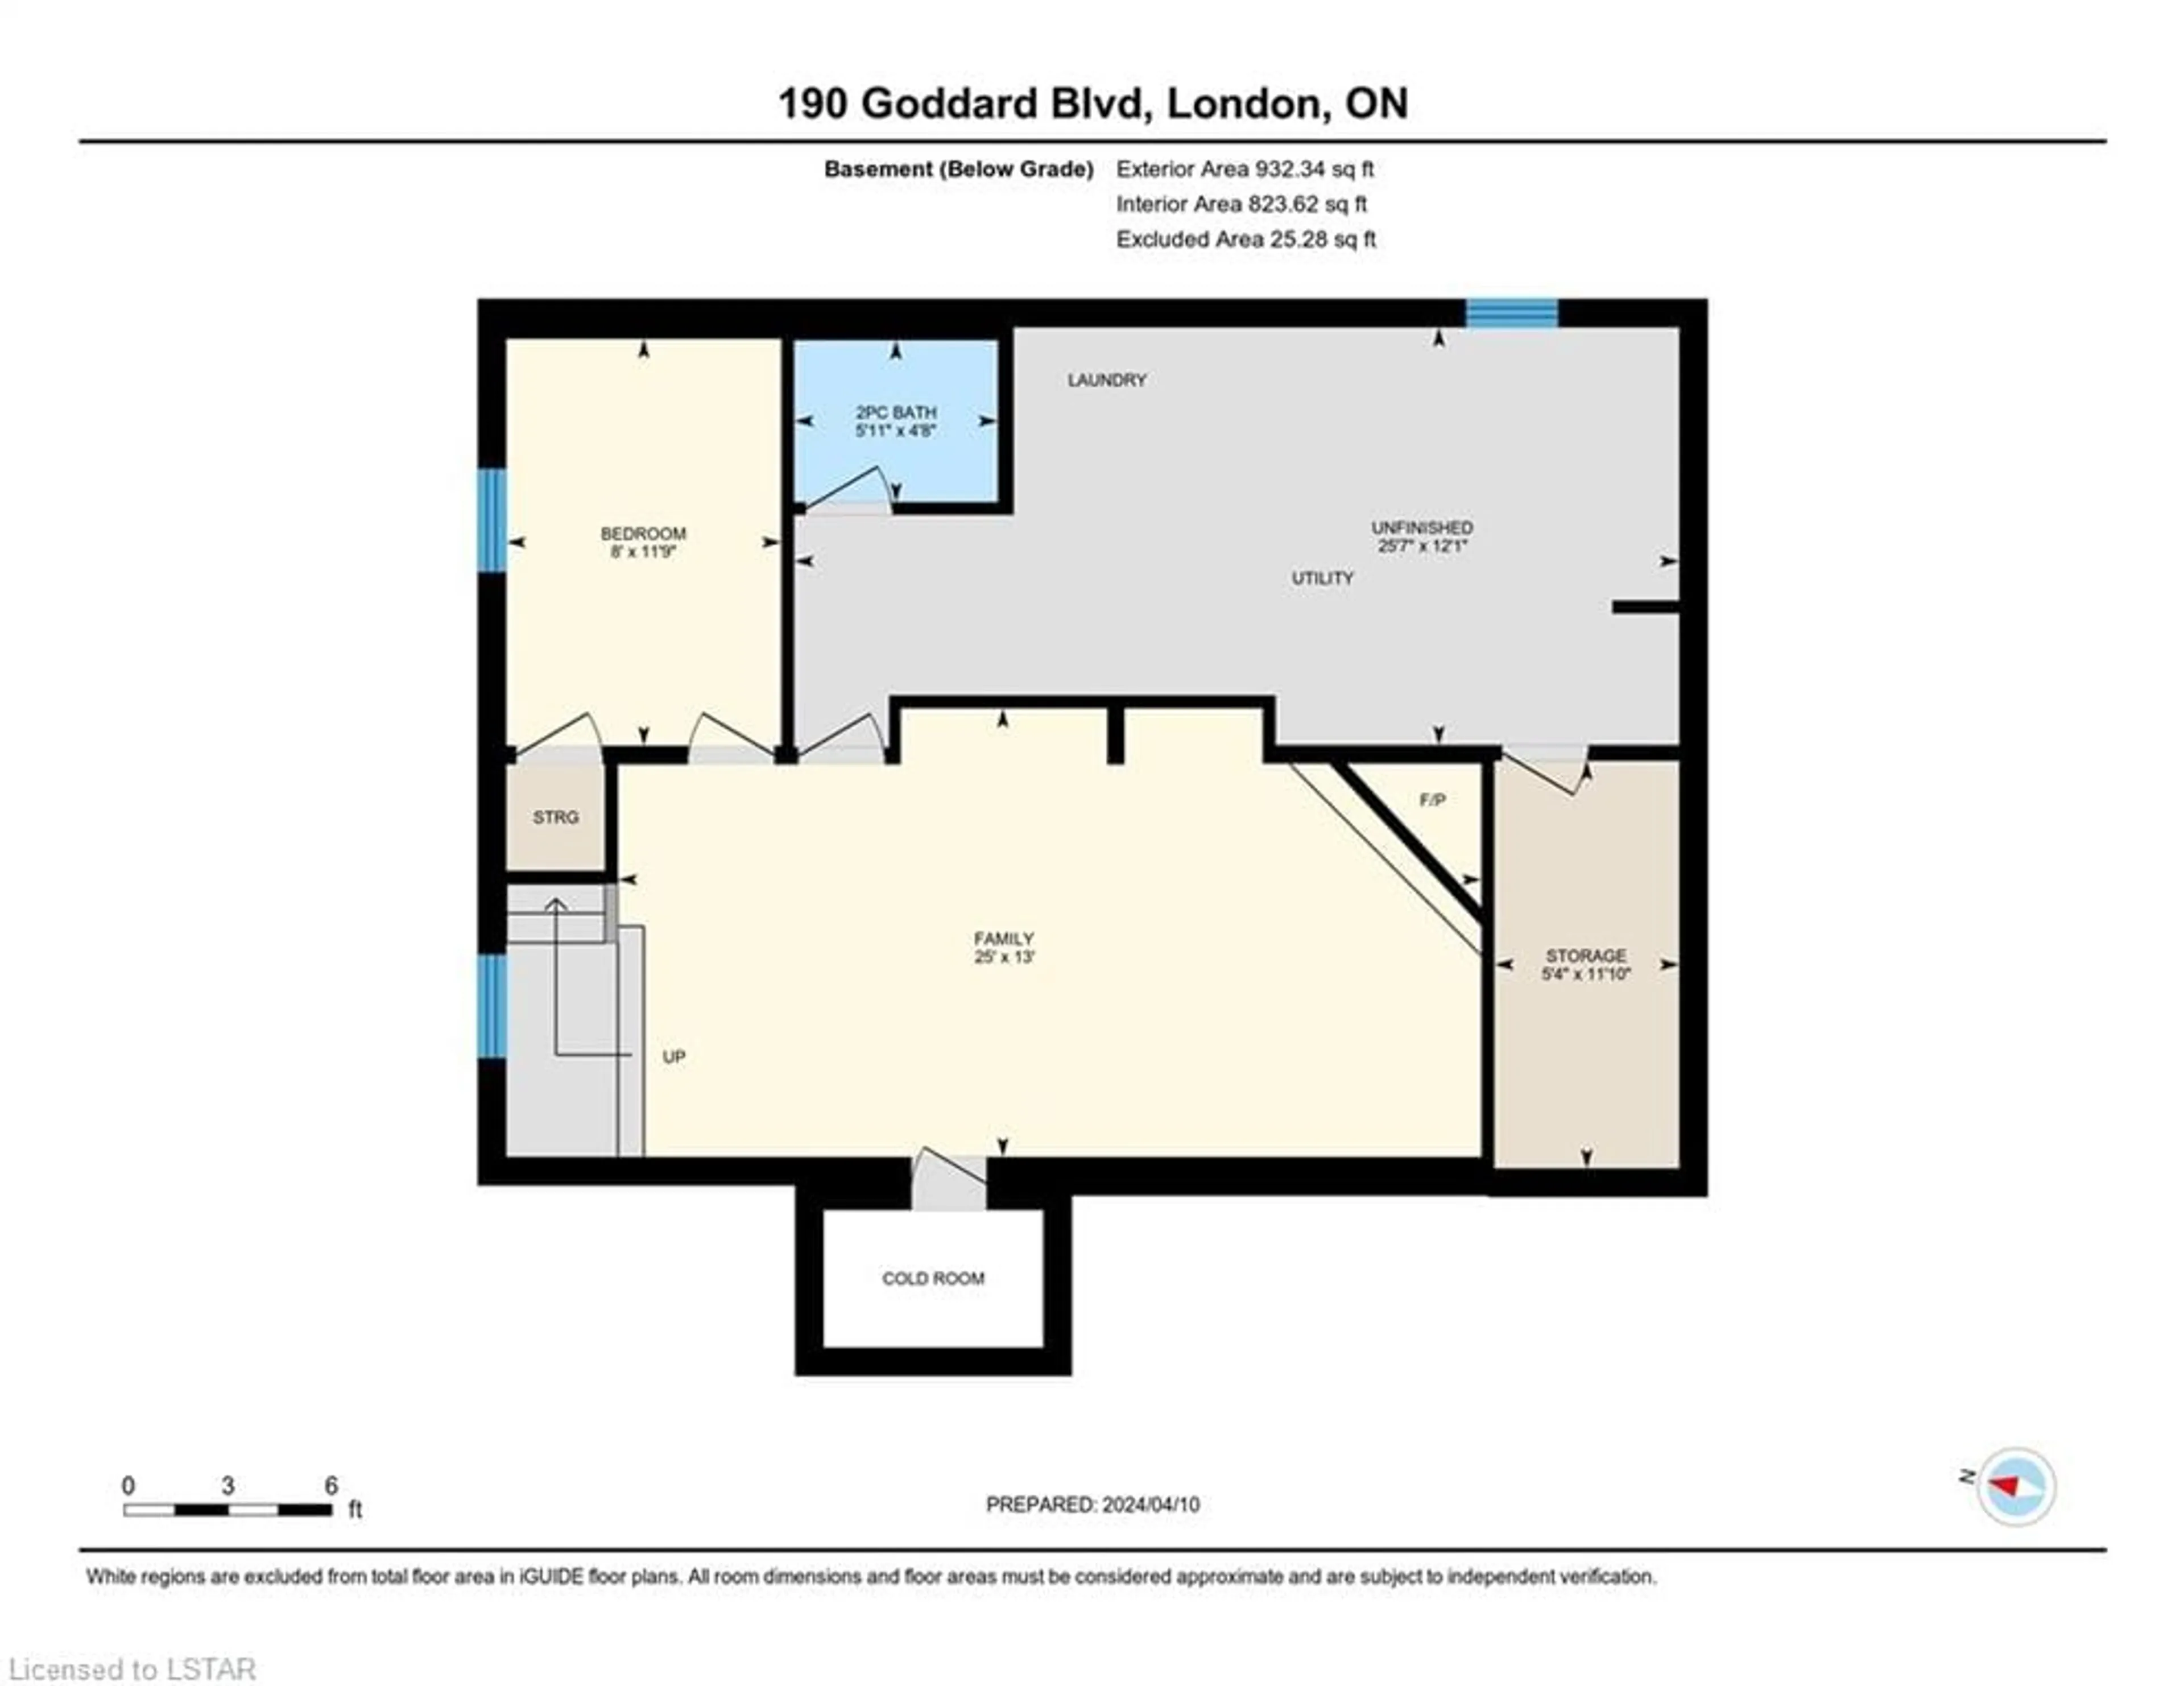 Floor plan for 190 Goddard Blvd, London Ontario N5W 5A1